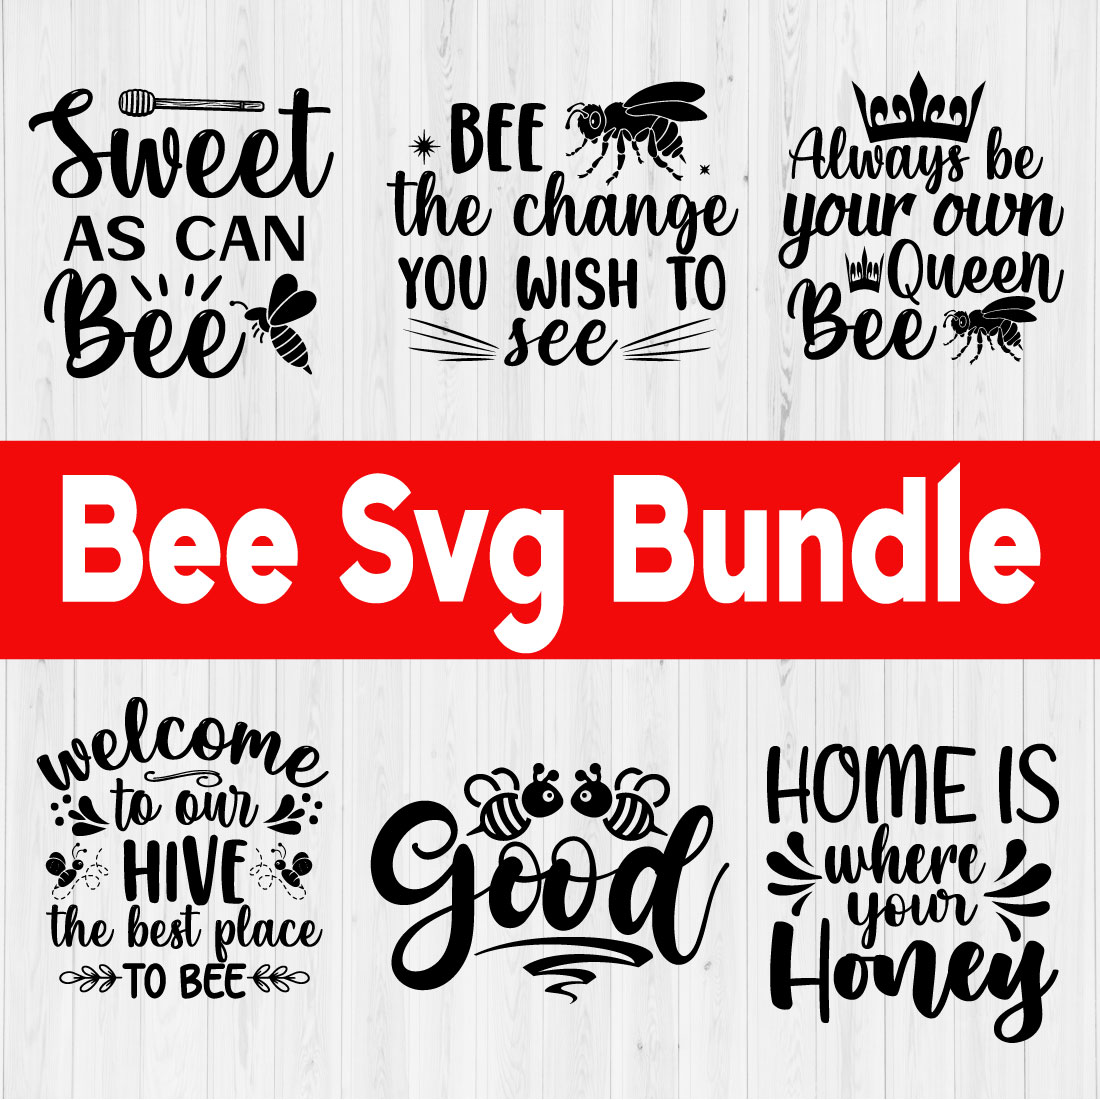 Bee Svg Bundle Vol1 cover image.